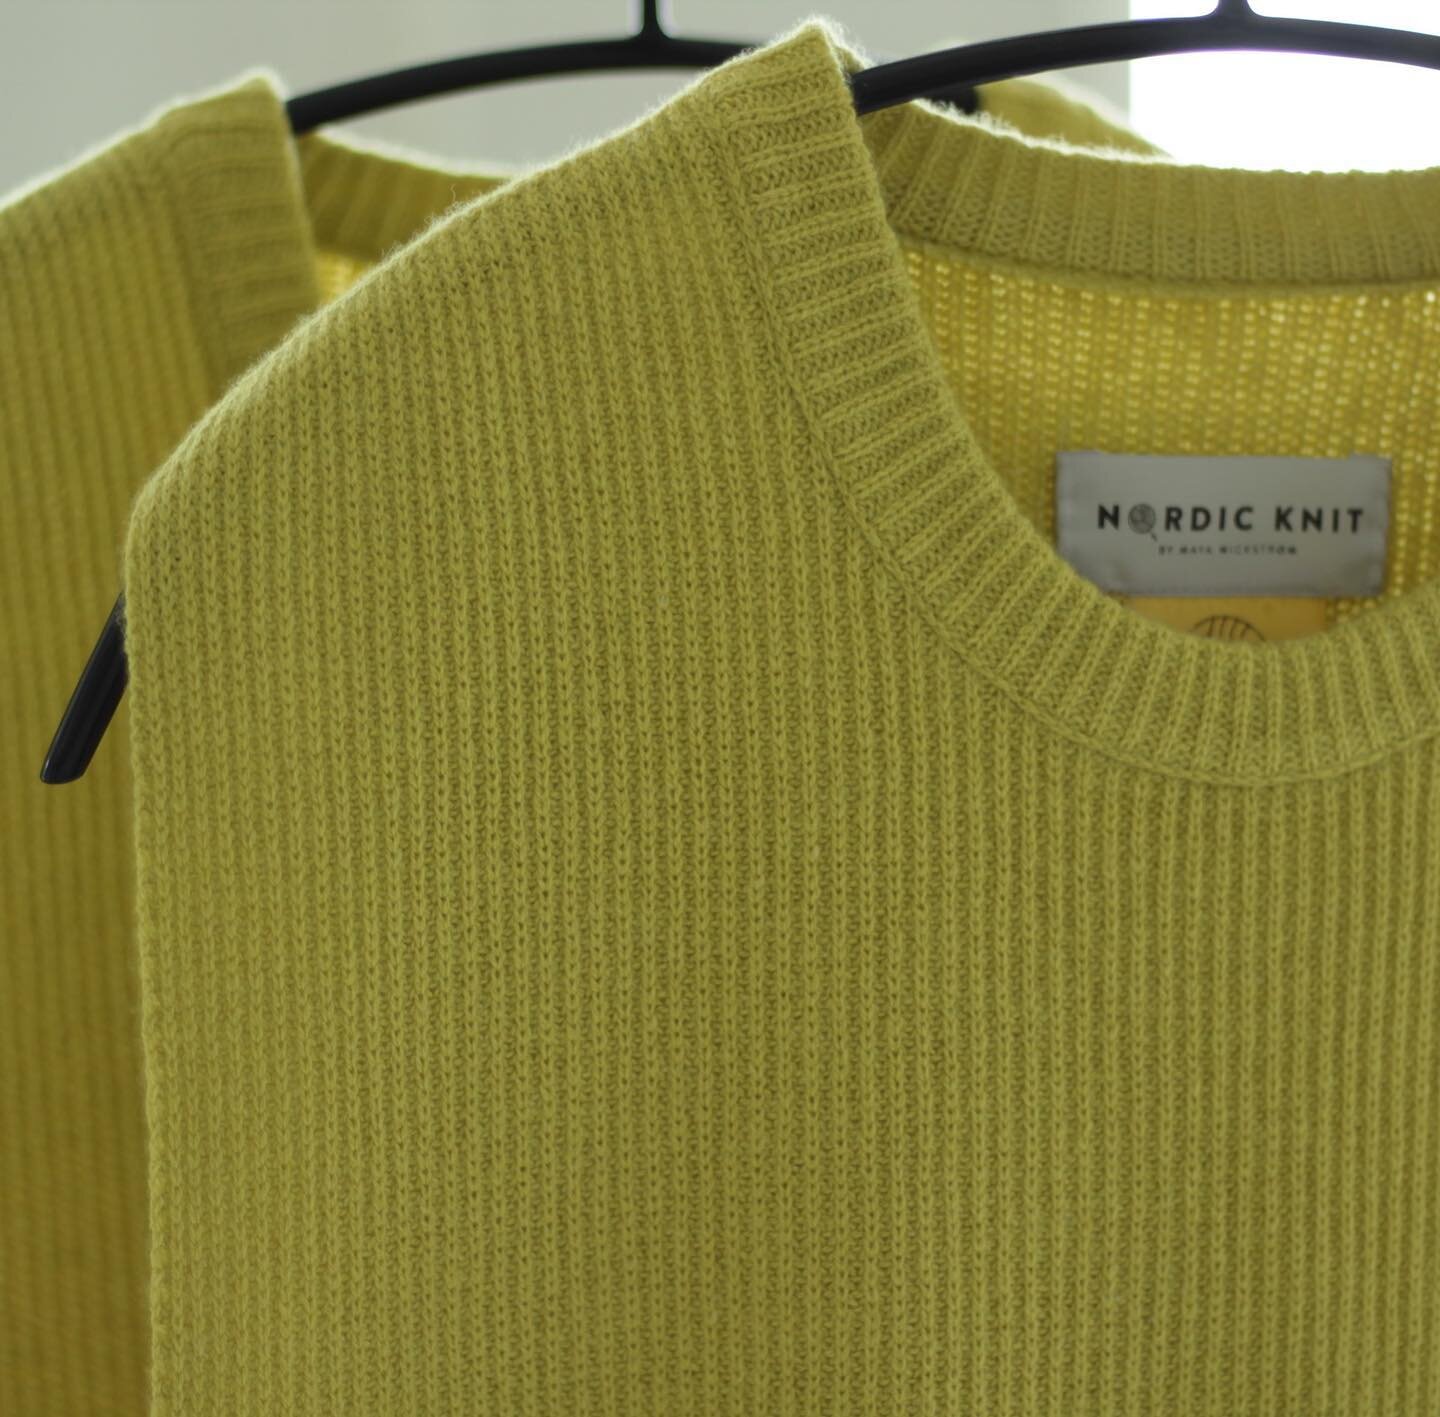 Mere gul! Og rigtig god weekend 👑

#nordicknit #vest #strik #knittersofinstagram #scandinaviandesign #womensknitwear #hygge